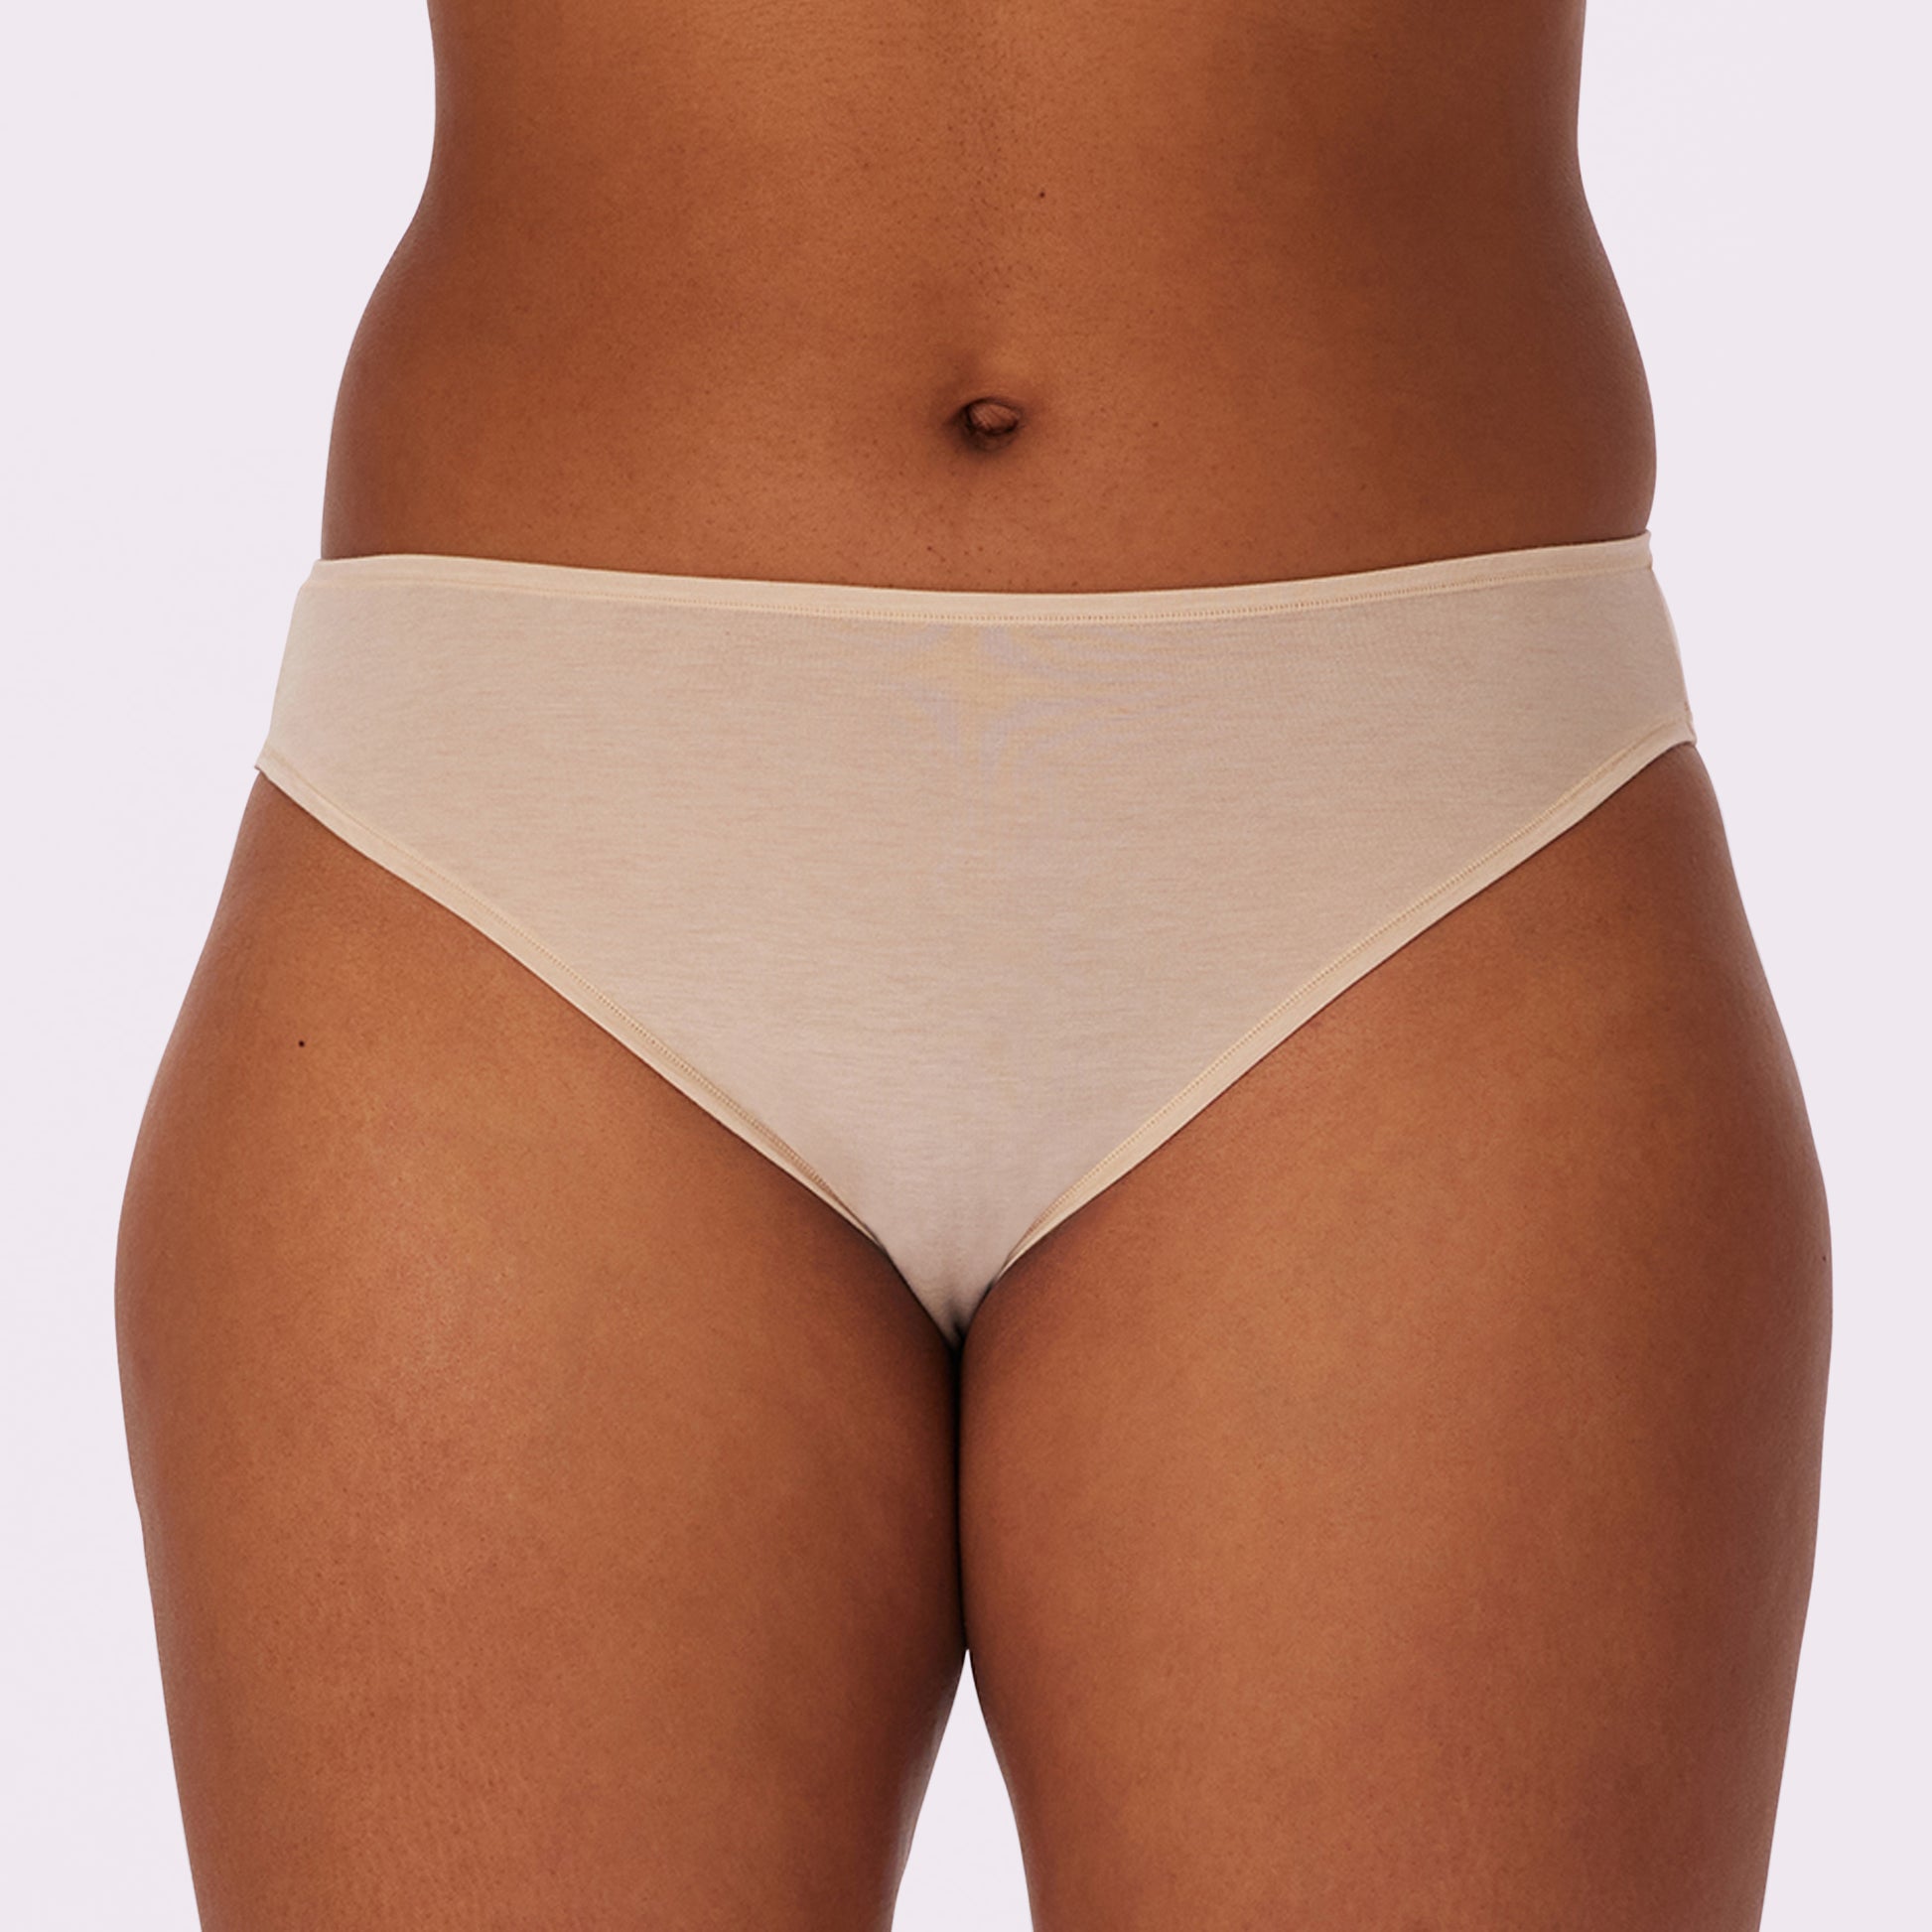 Women's Soft Cotton Panty High Cut Brief, Beige, X-Large